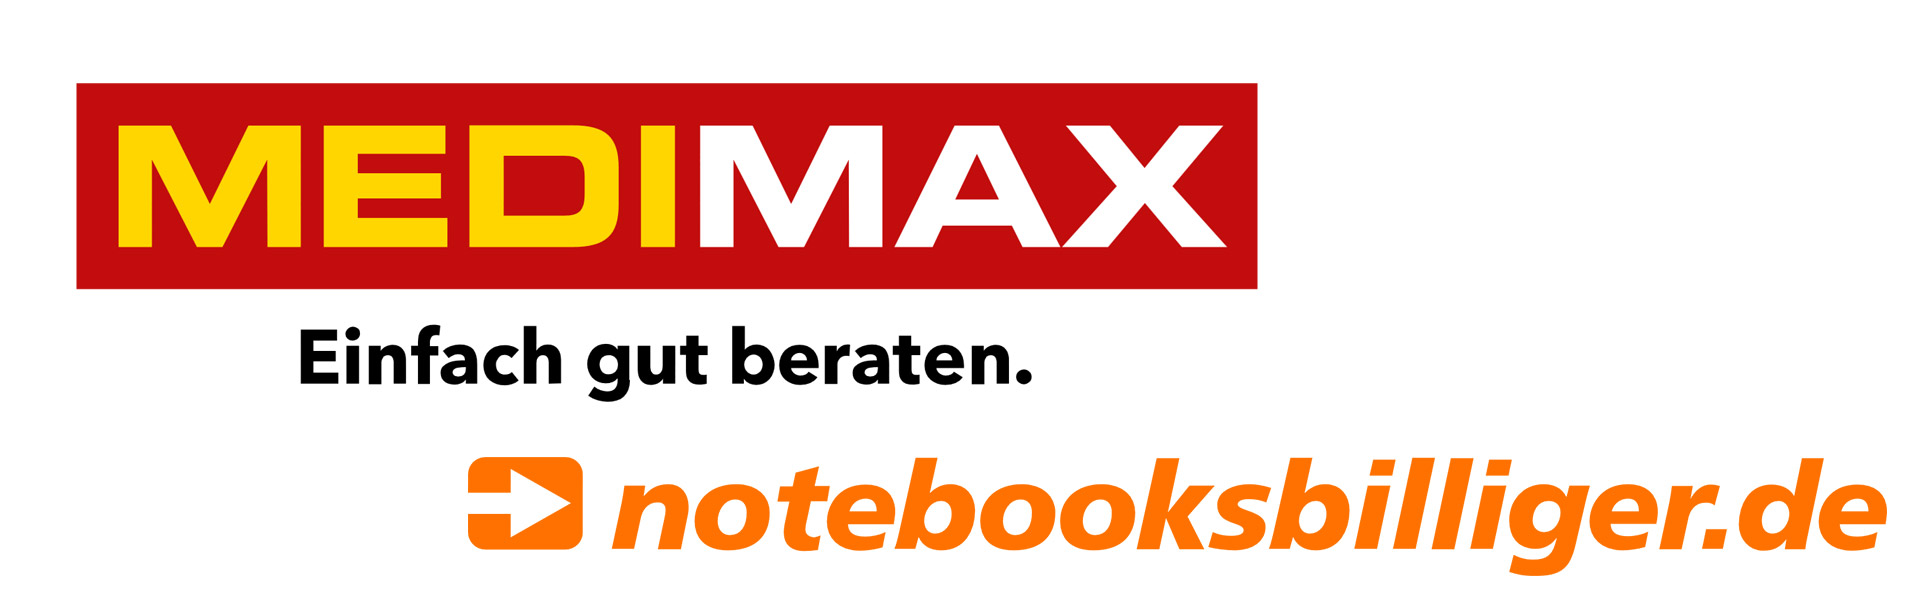 Logos Medimax und notebooksbilliger.de